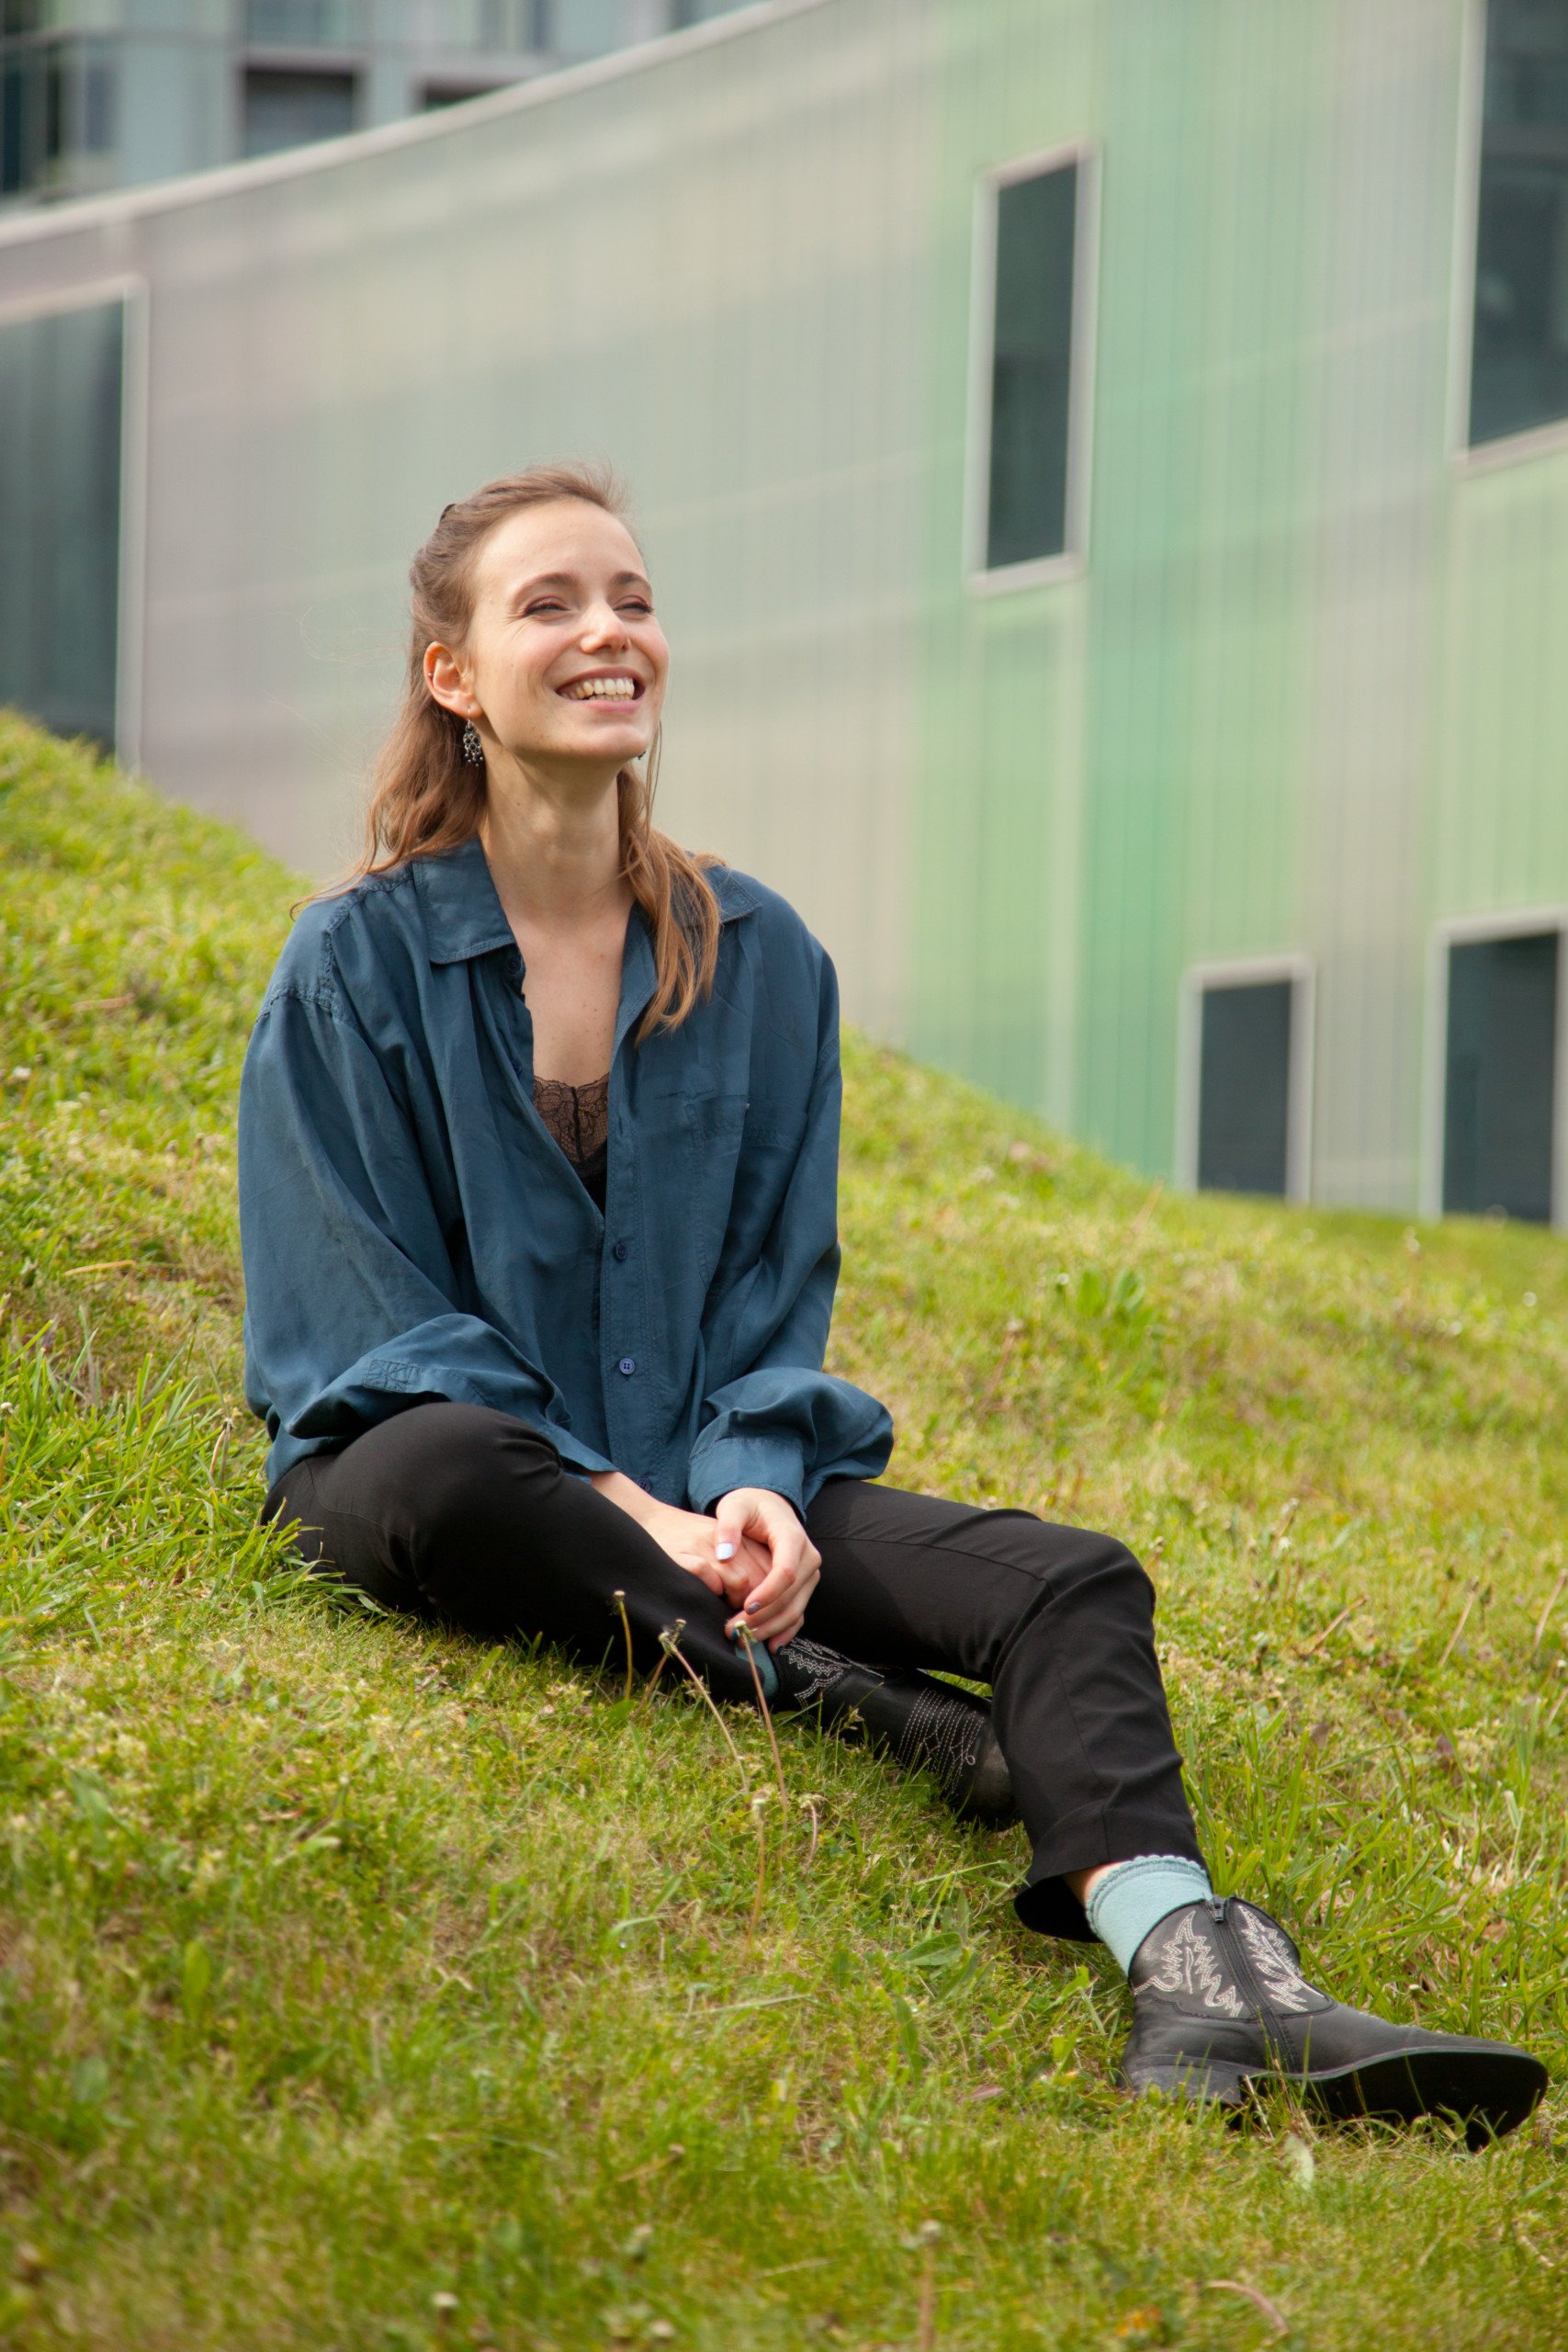 Laudine Dard sitting on grass verge smiling